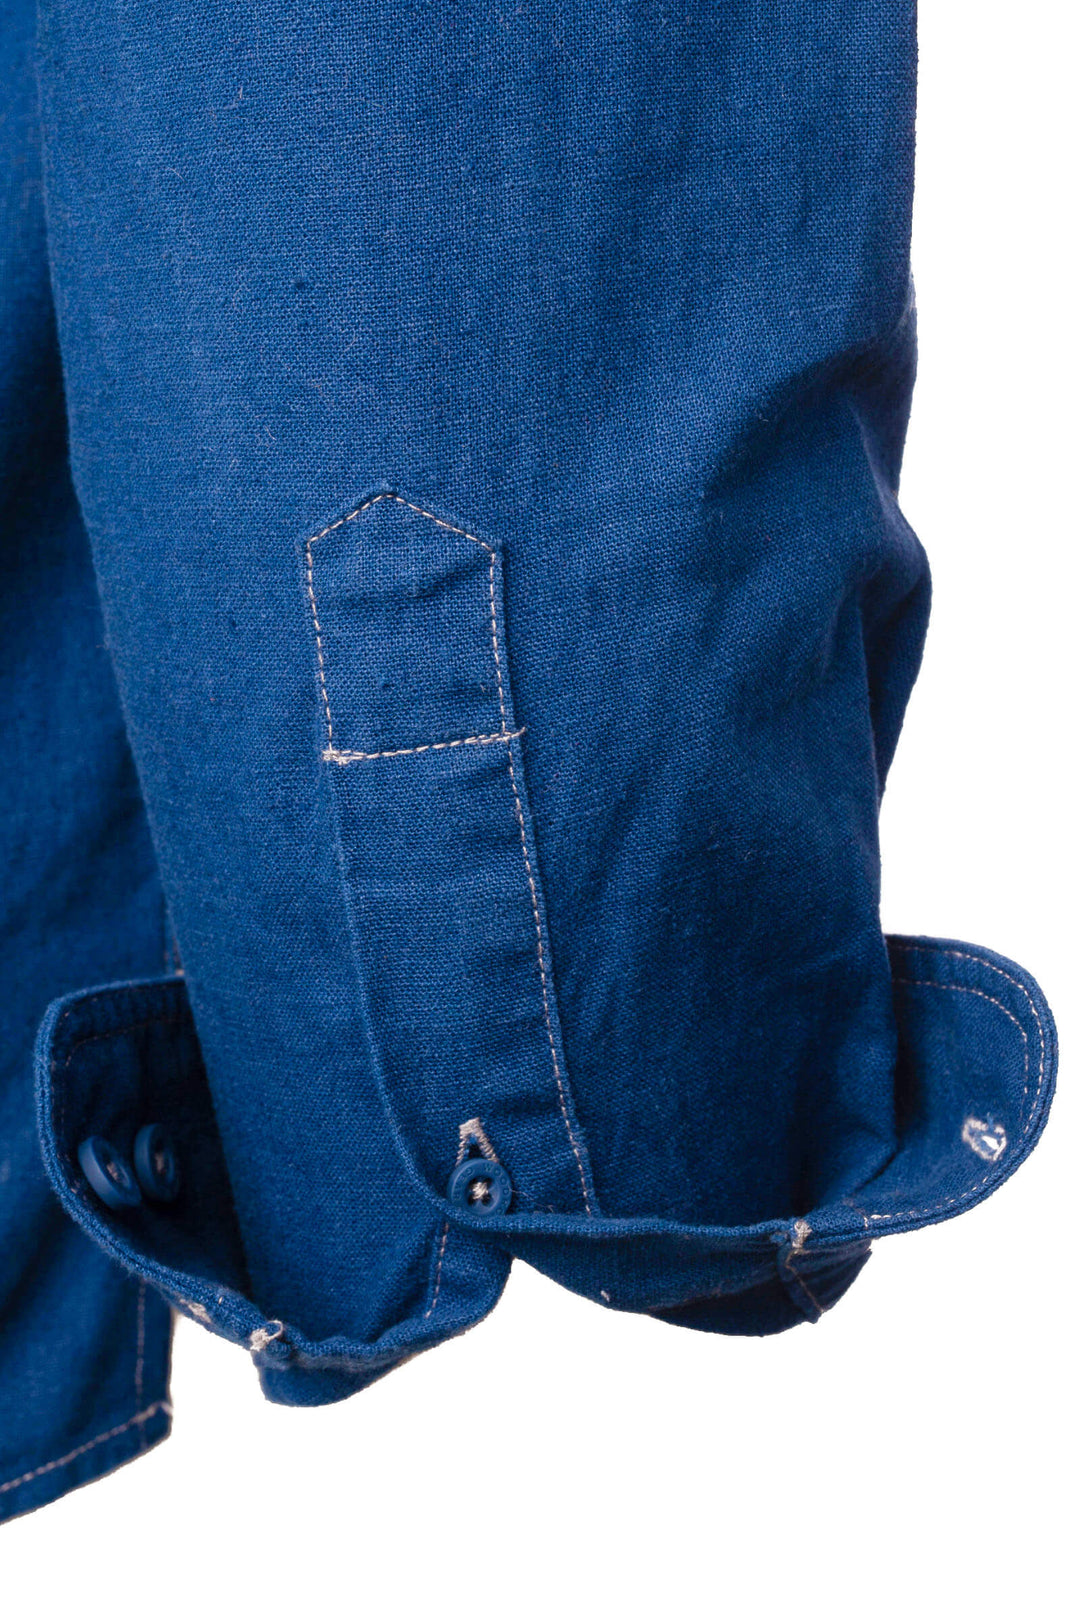 Boundary Chamois Shirt - Sleeve - Woodroad Gear Co.